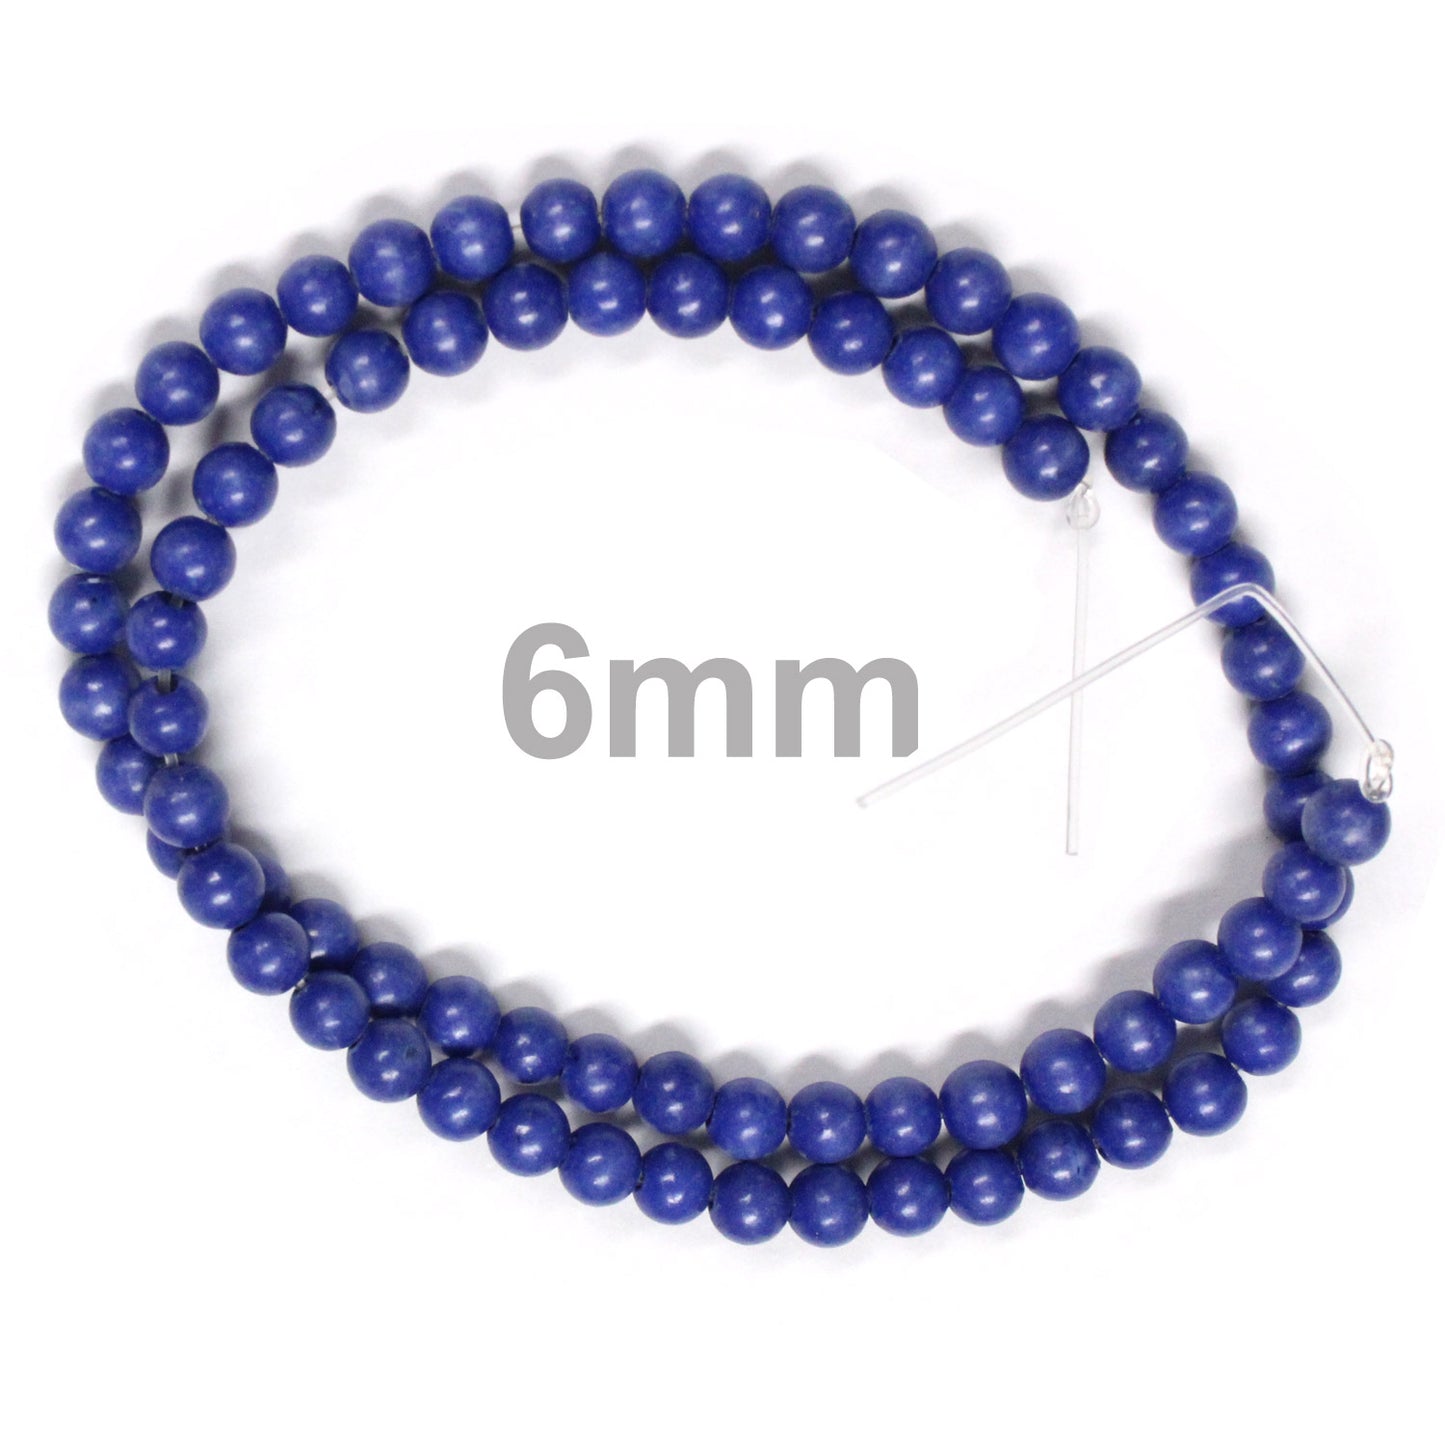 6mm Blue Lapis / 16" Strand / man-made / smooth round stone beads